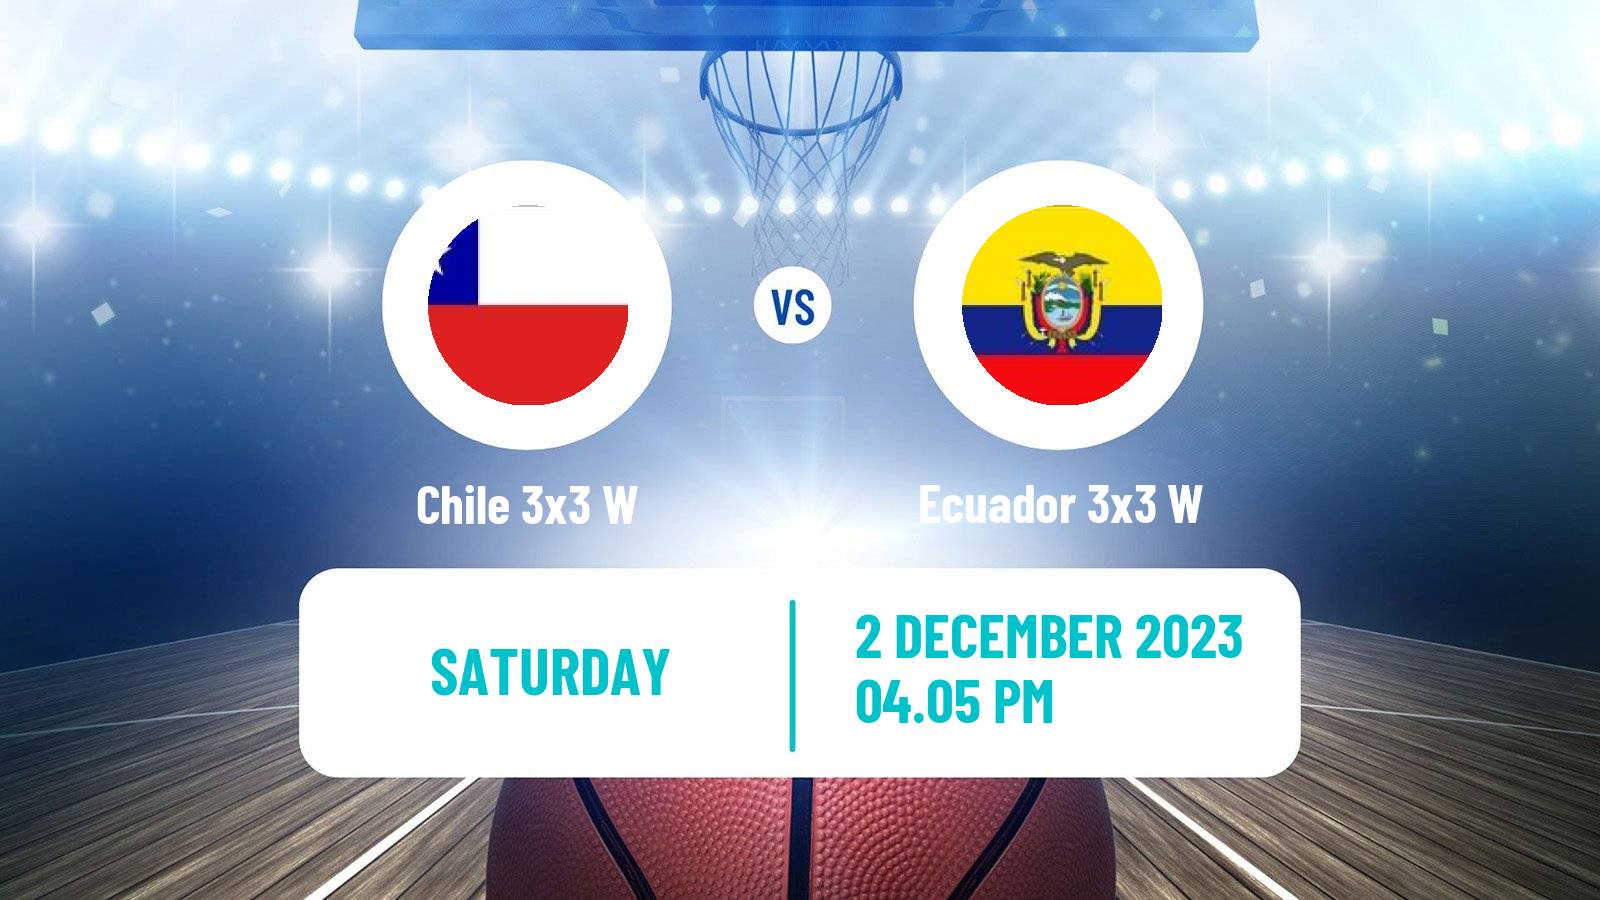 Basketball Americup 3x3 Women Chile 3x3 W - Ecuador 3x3 W